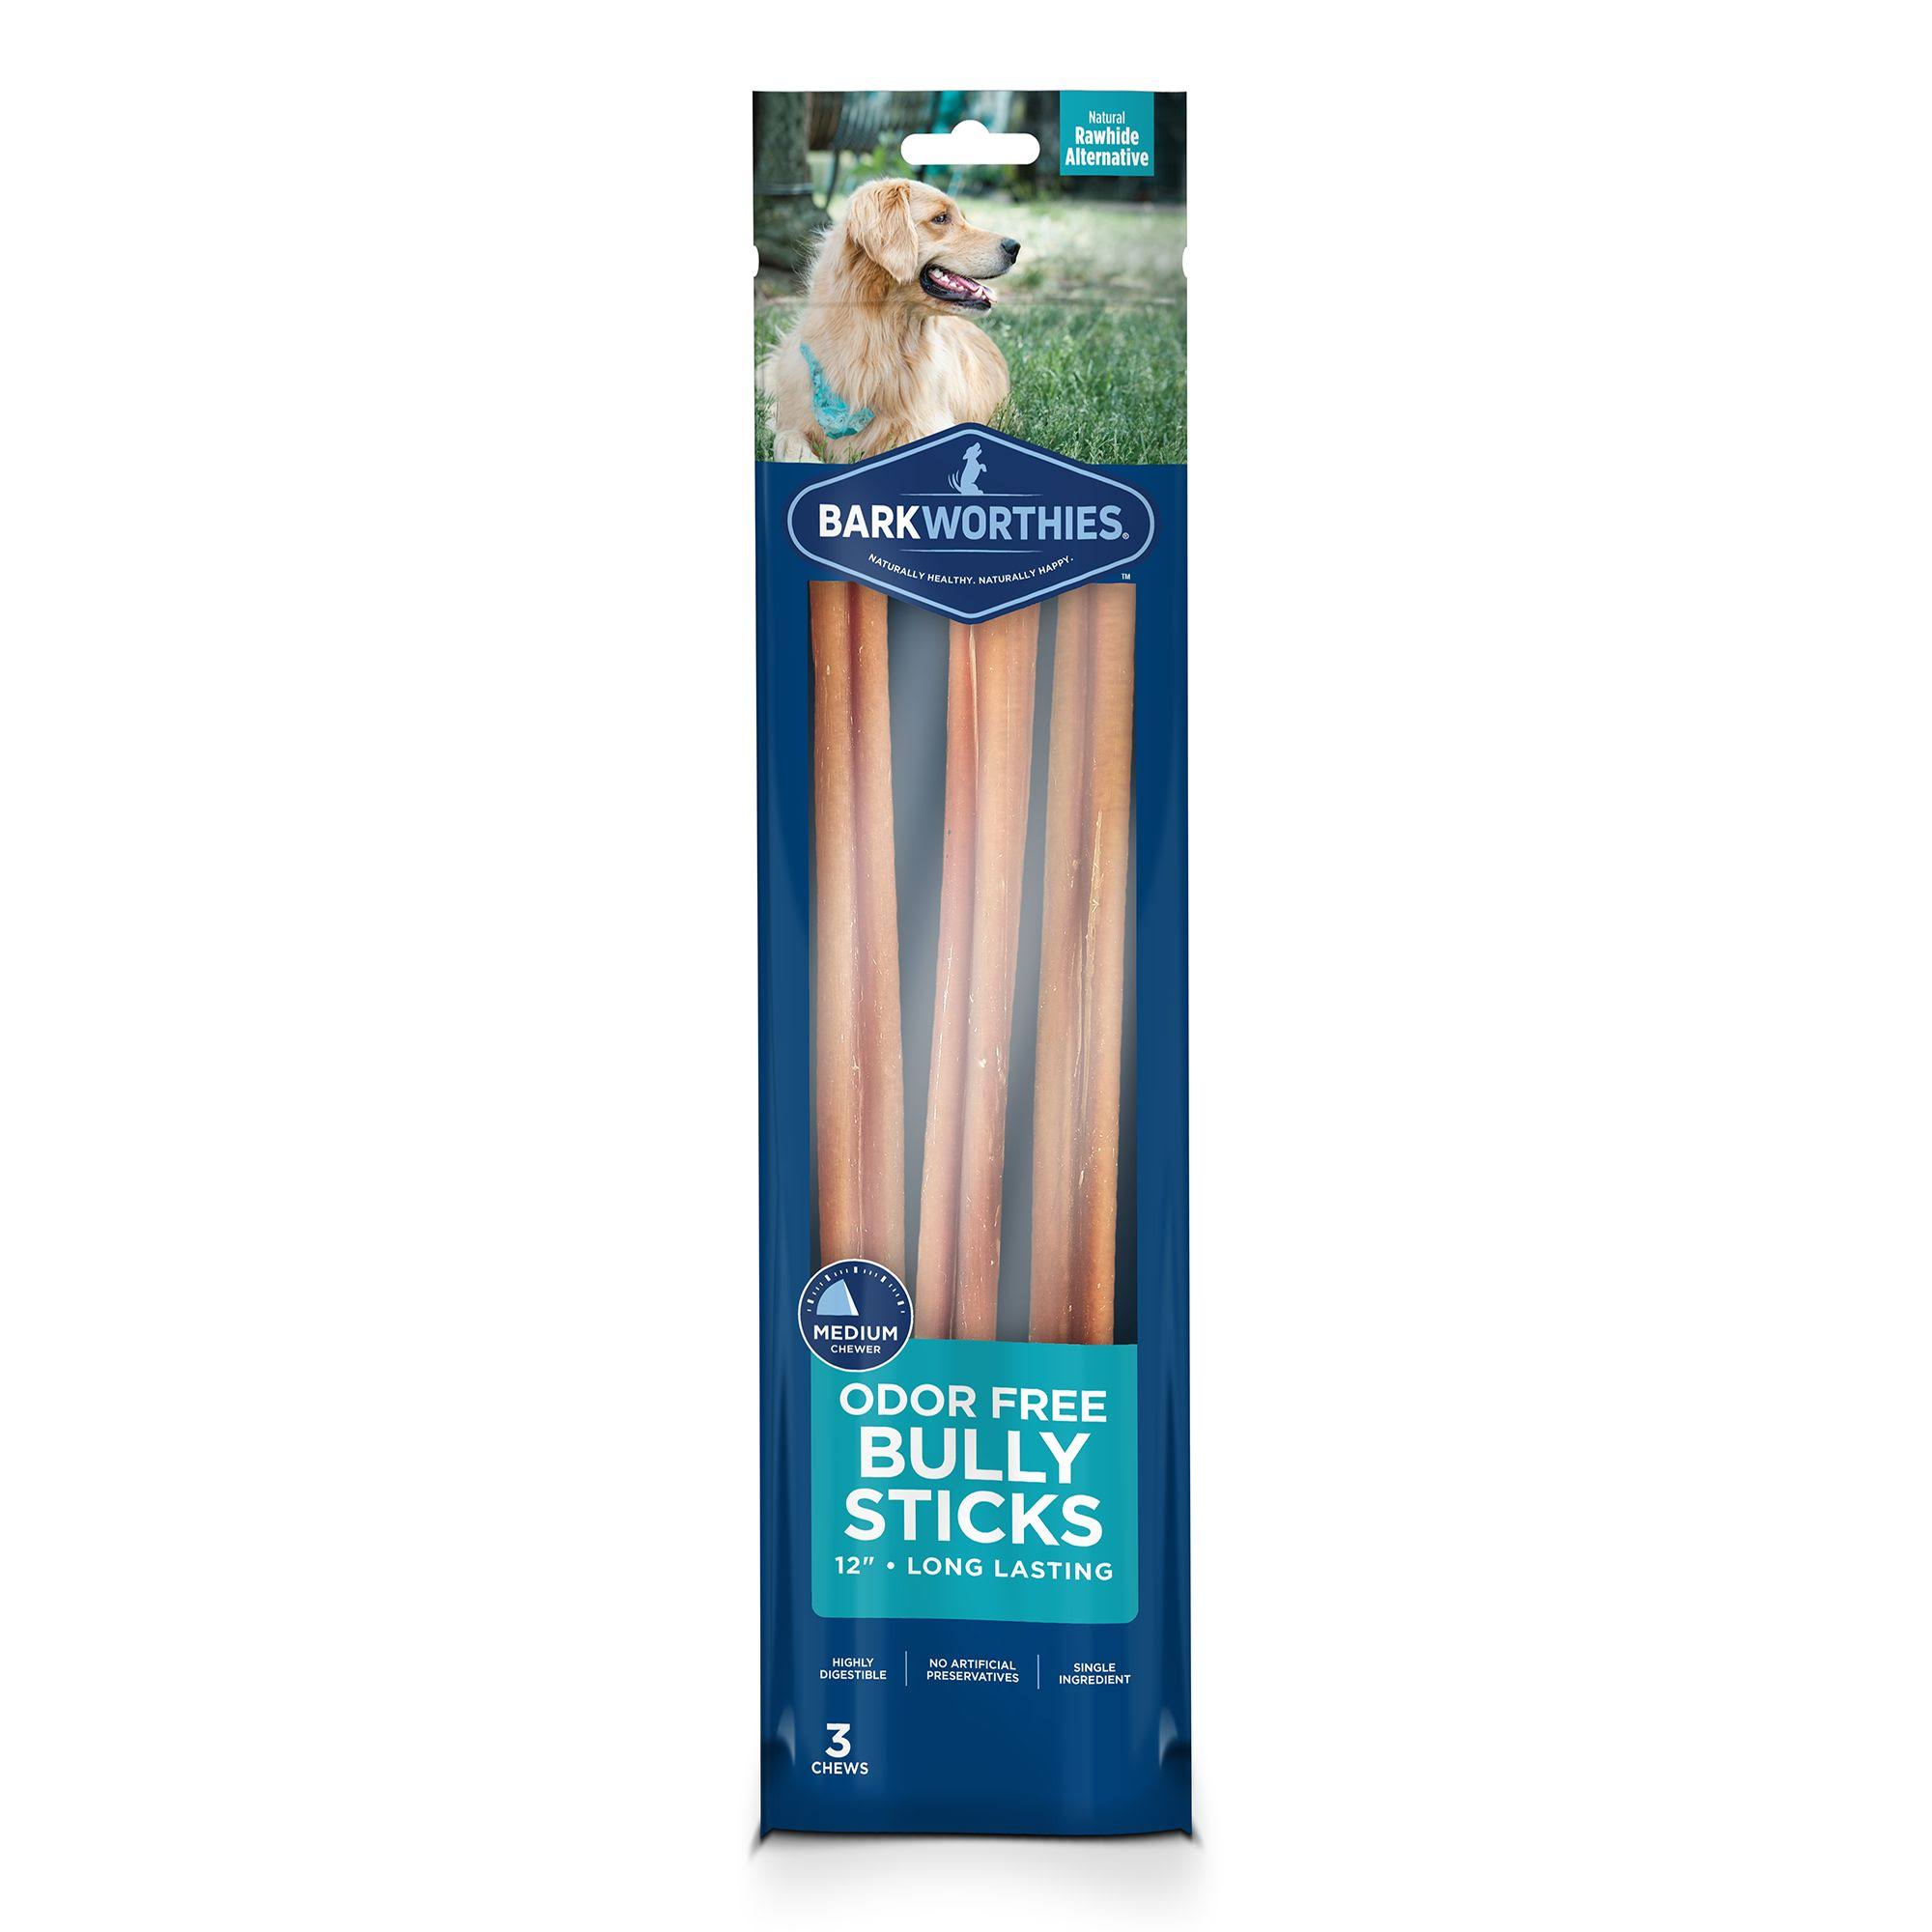 Barkworthies Odor Free Bully Sticks - 12", 3 Pack